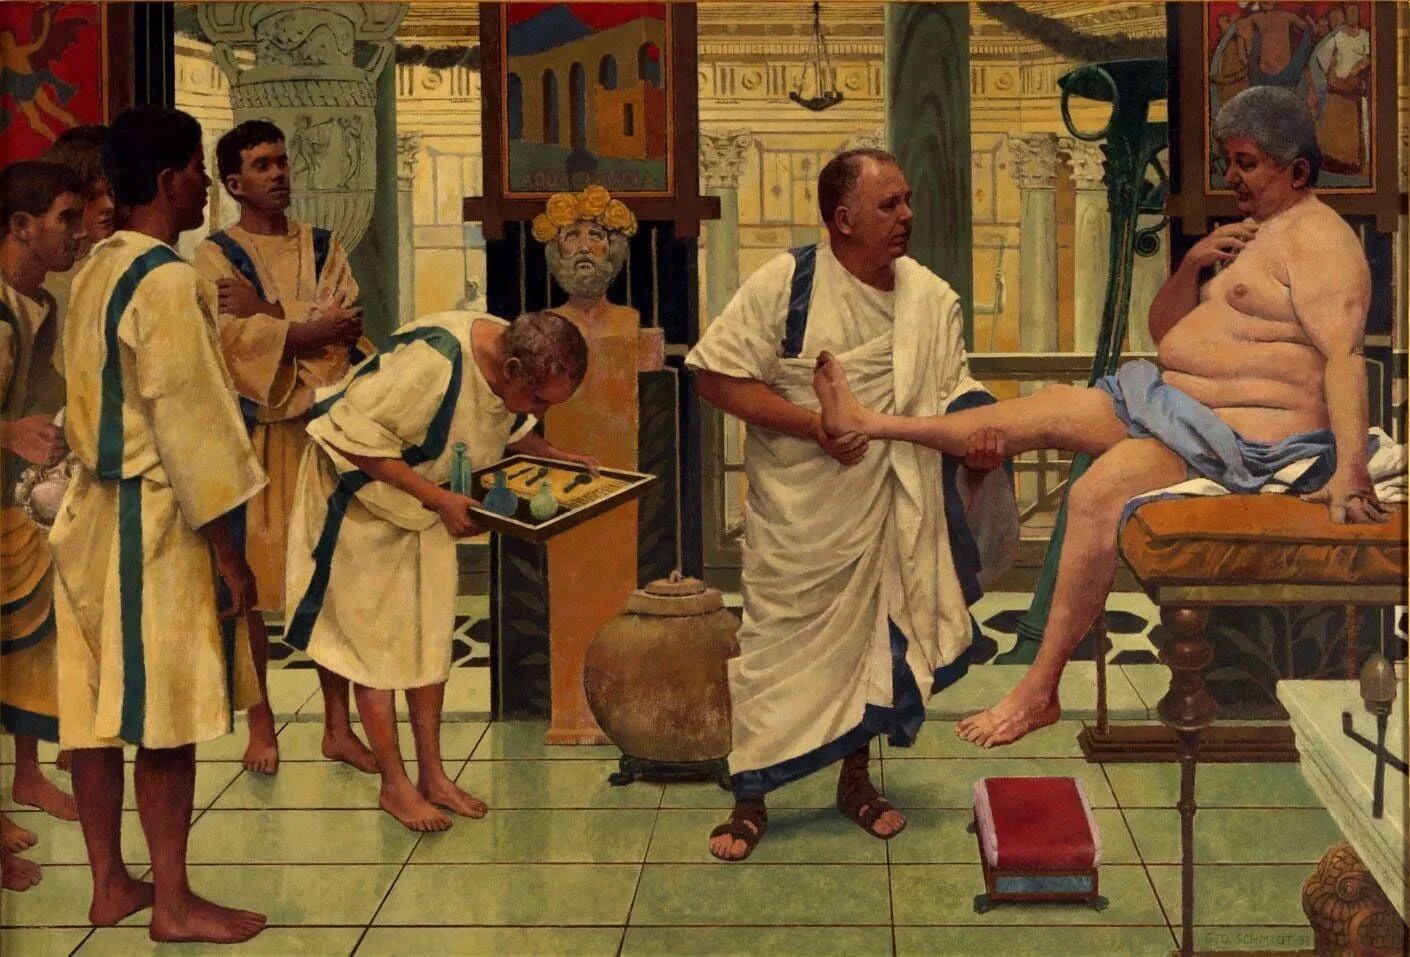 Греческое наказание. Римский триклиний. Античная медицина.